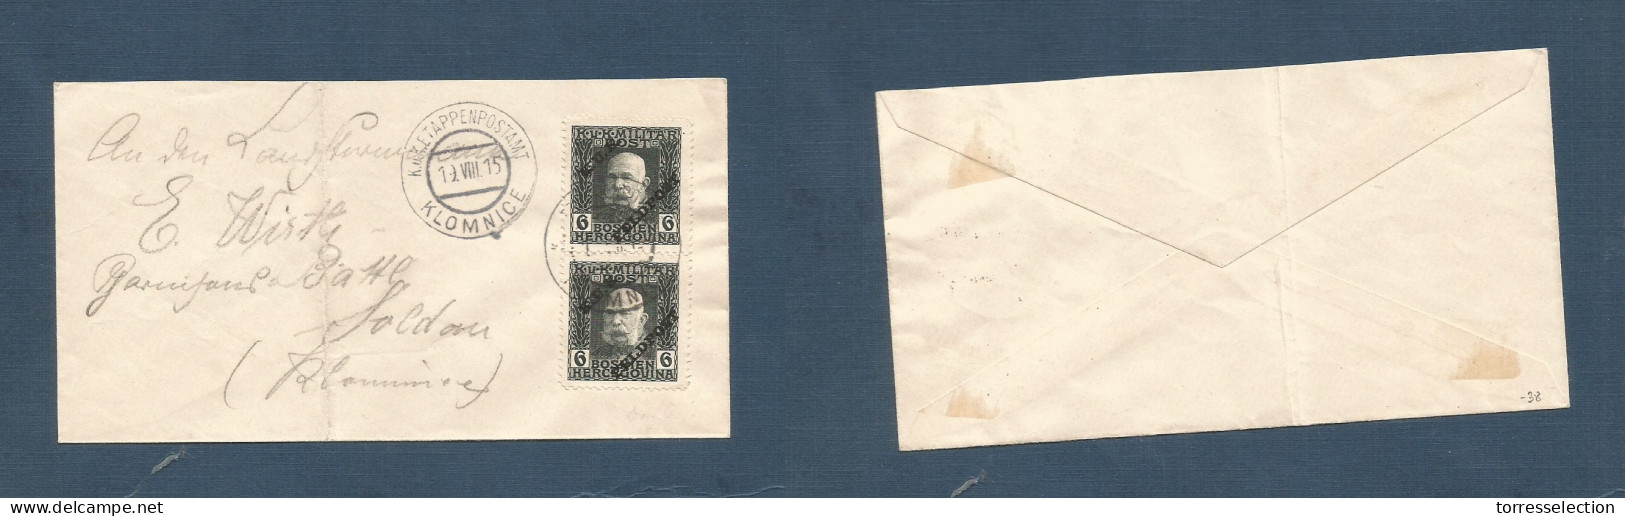 BOSNIA. 1915 (19 Aug) Klomnice Local Multifkd Issue Envelope 12k Rate, Tied Cds. XSALE. - Bosnie-Herzegovine